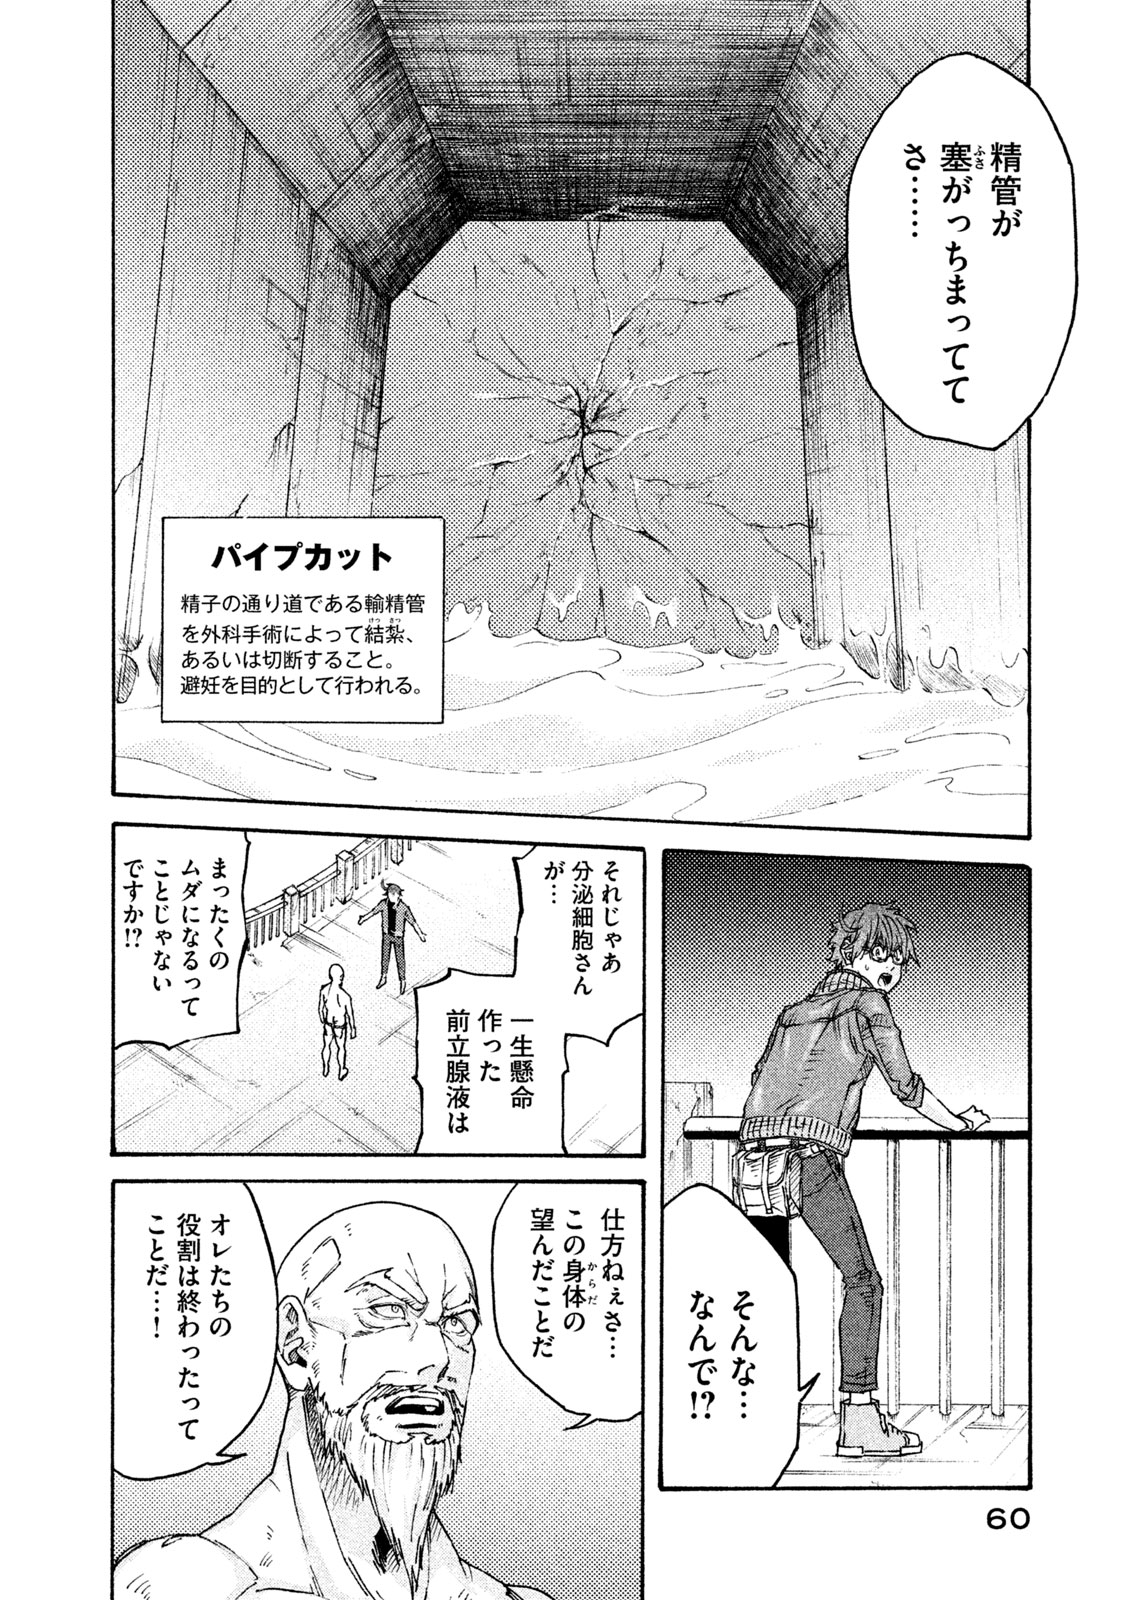 Hataraku Saibou BLACK - Chapter 20 - Page 16